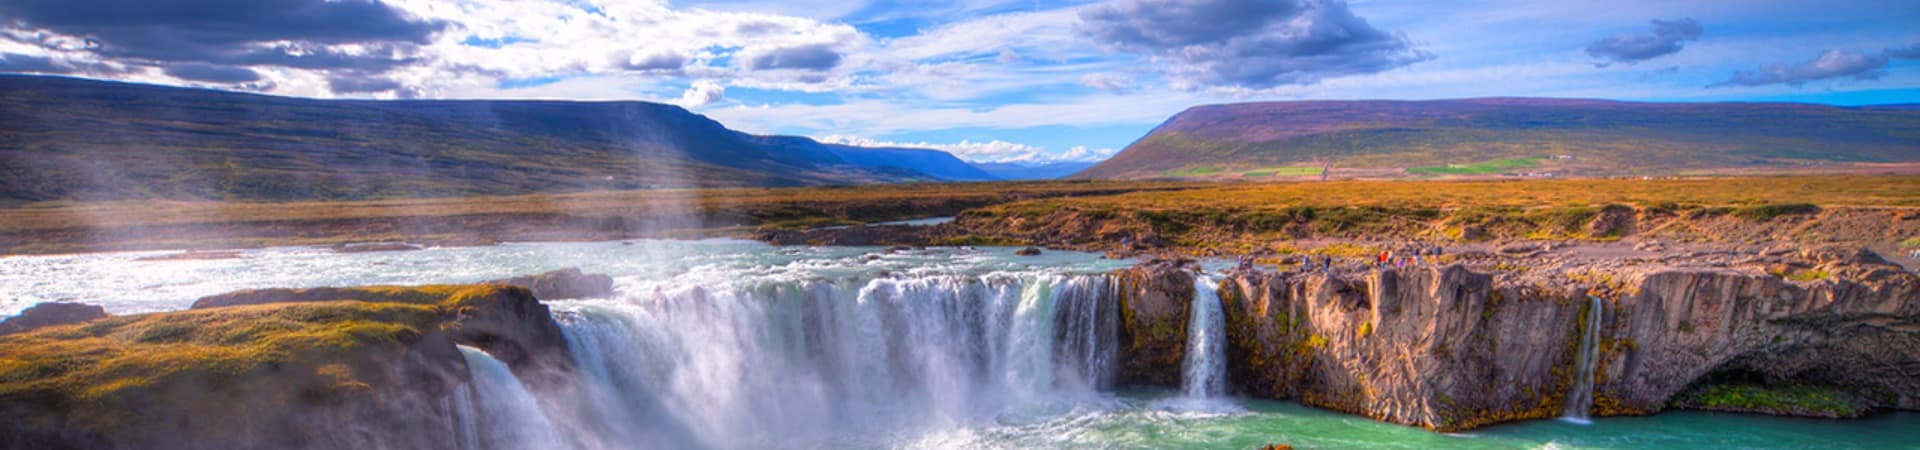 Islandia godafoss waterfall